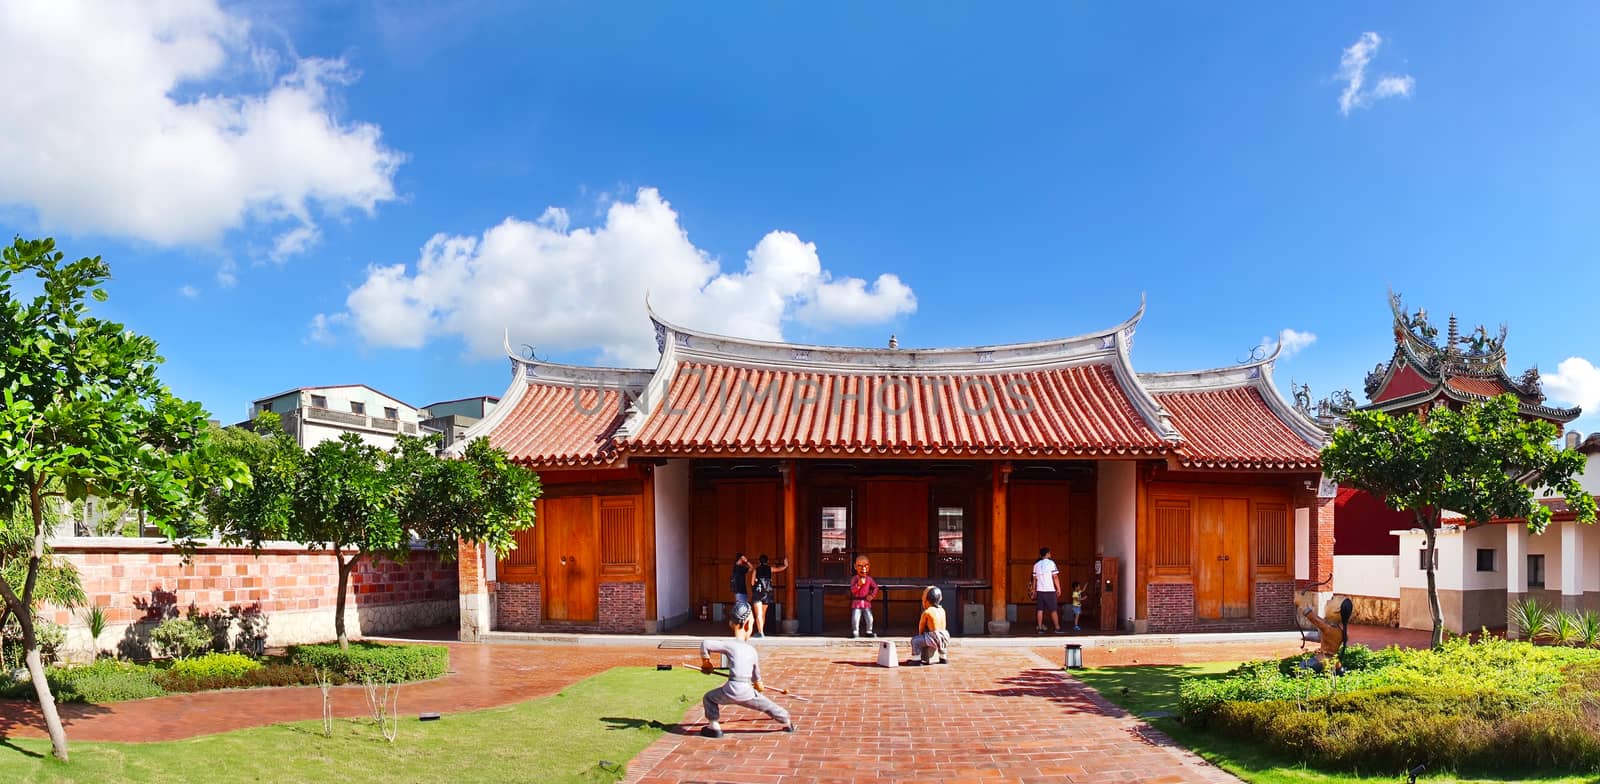 The Fongyi Imperial Academy in Taiwan by shiyali